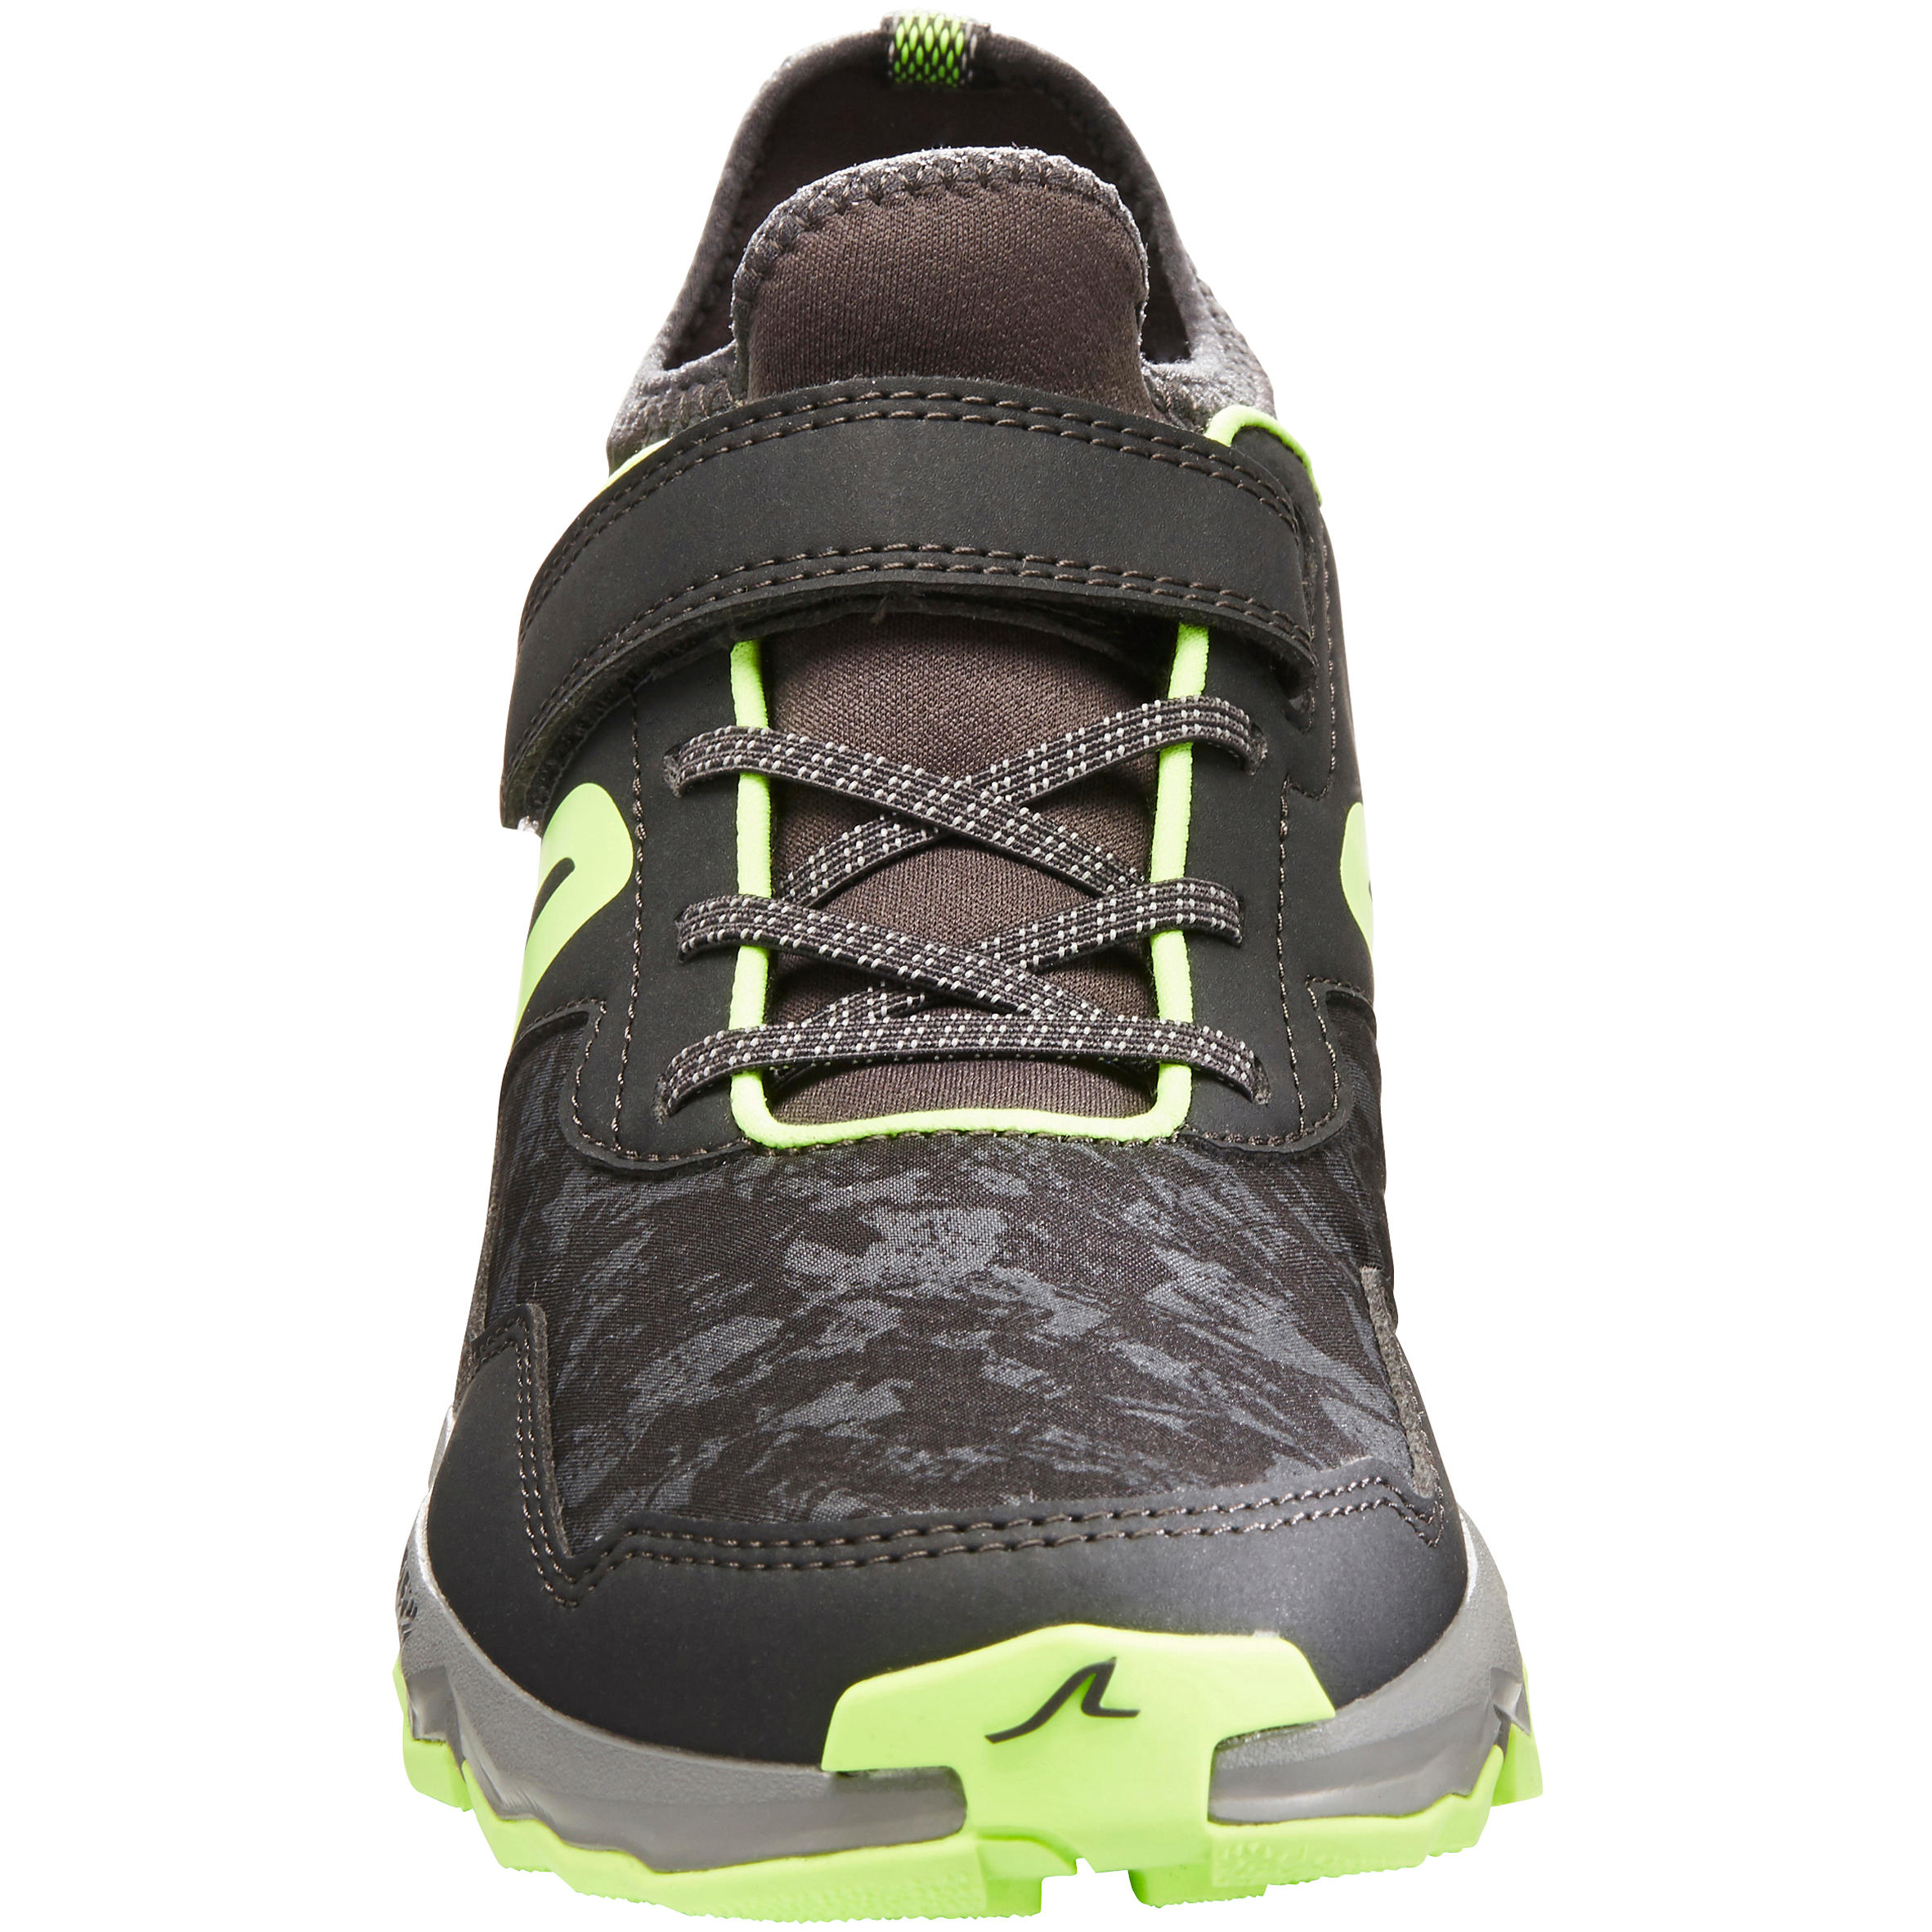 NW 580 Children's Nordic Walking Shoes grey green 3/11